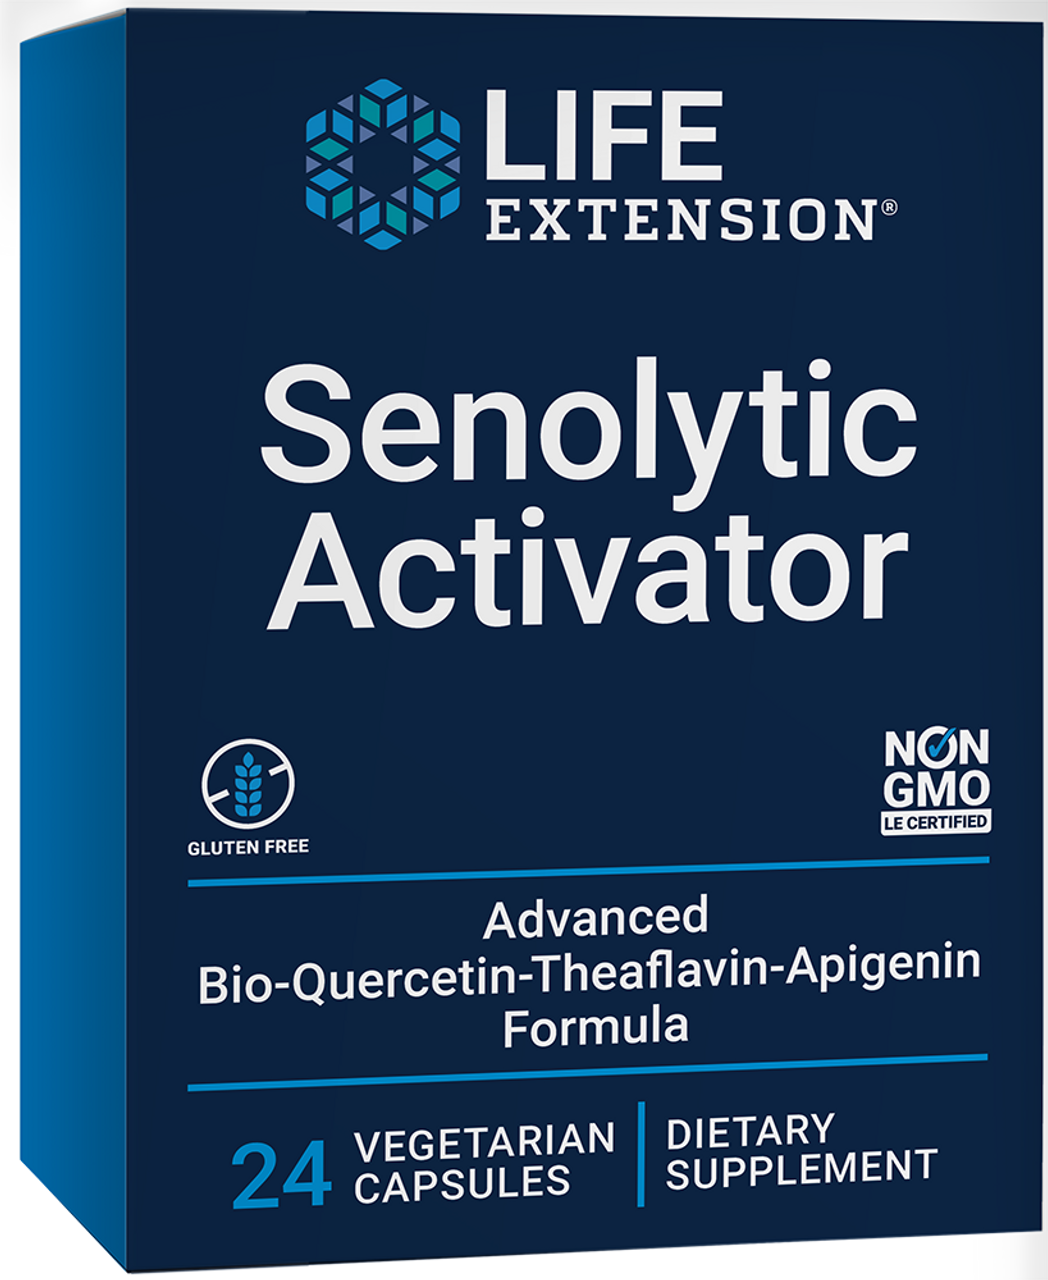 Senolytic Activator 24 vegetarian capsules